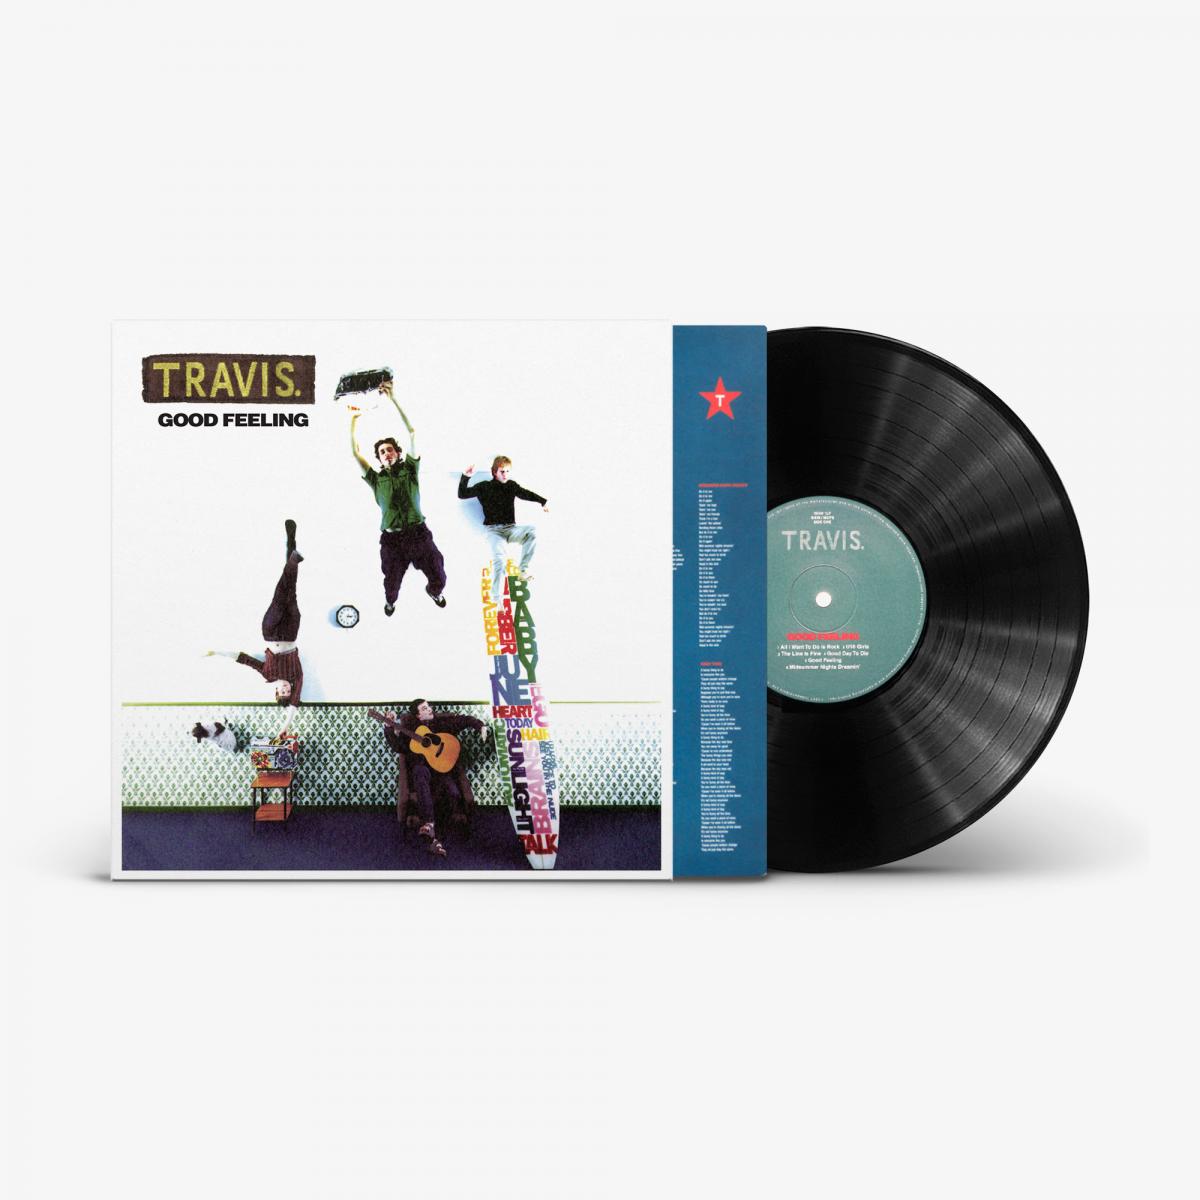 Travis to reissue 1997 debut album 'Good Feeling' on vinyl - April 2nd via Craft Recordings